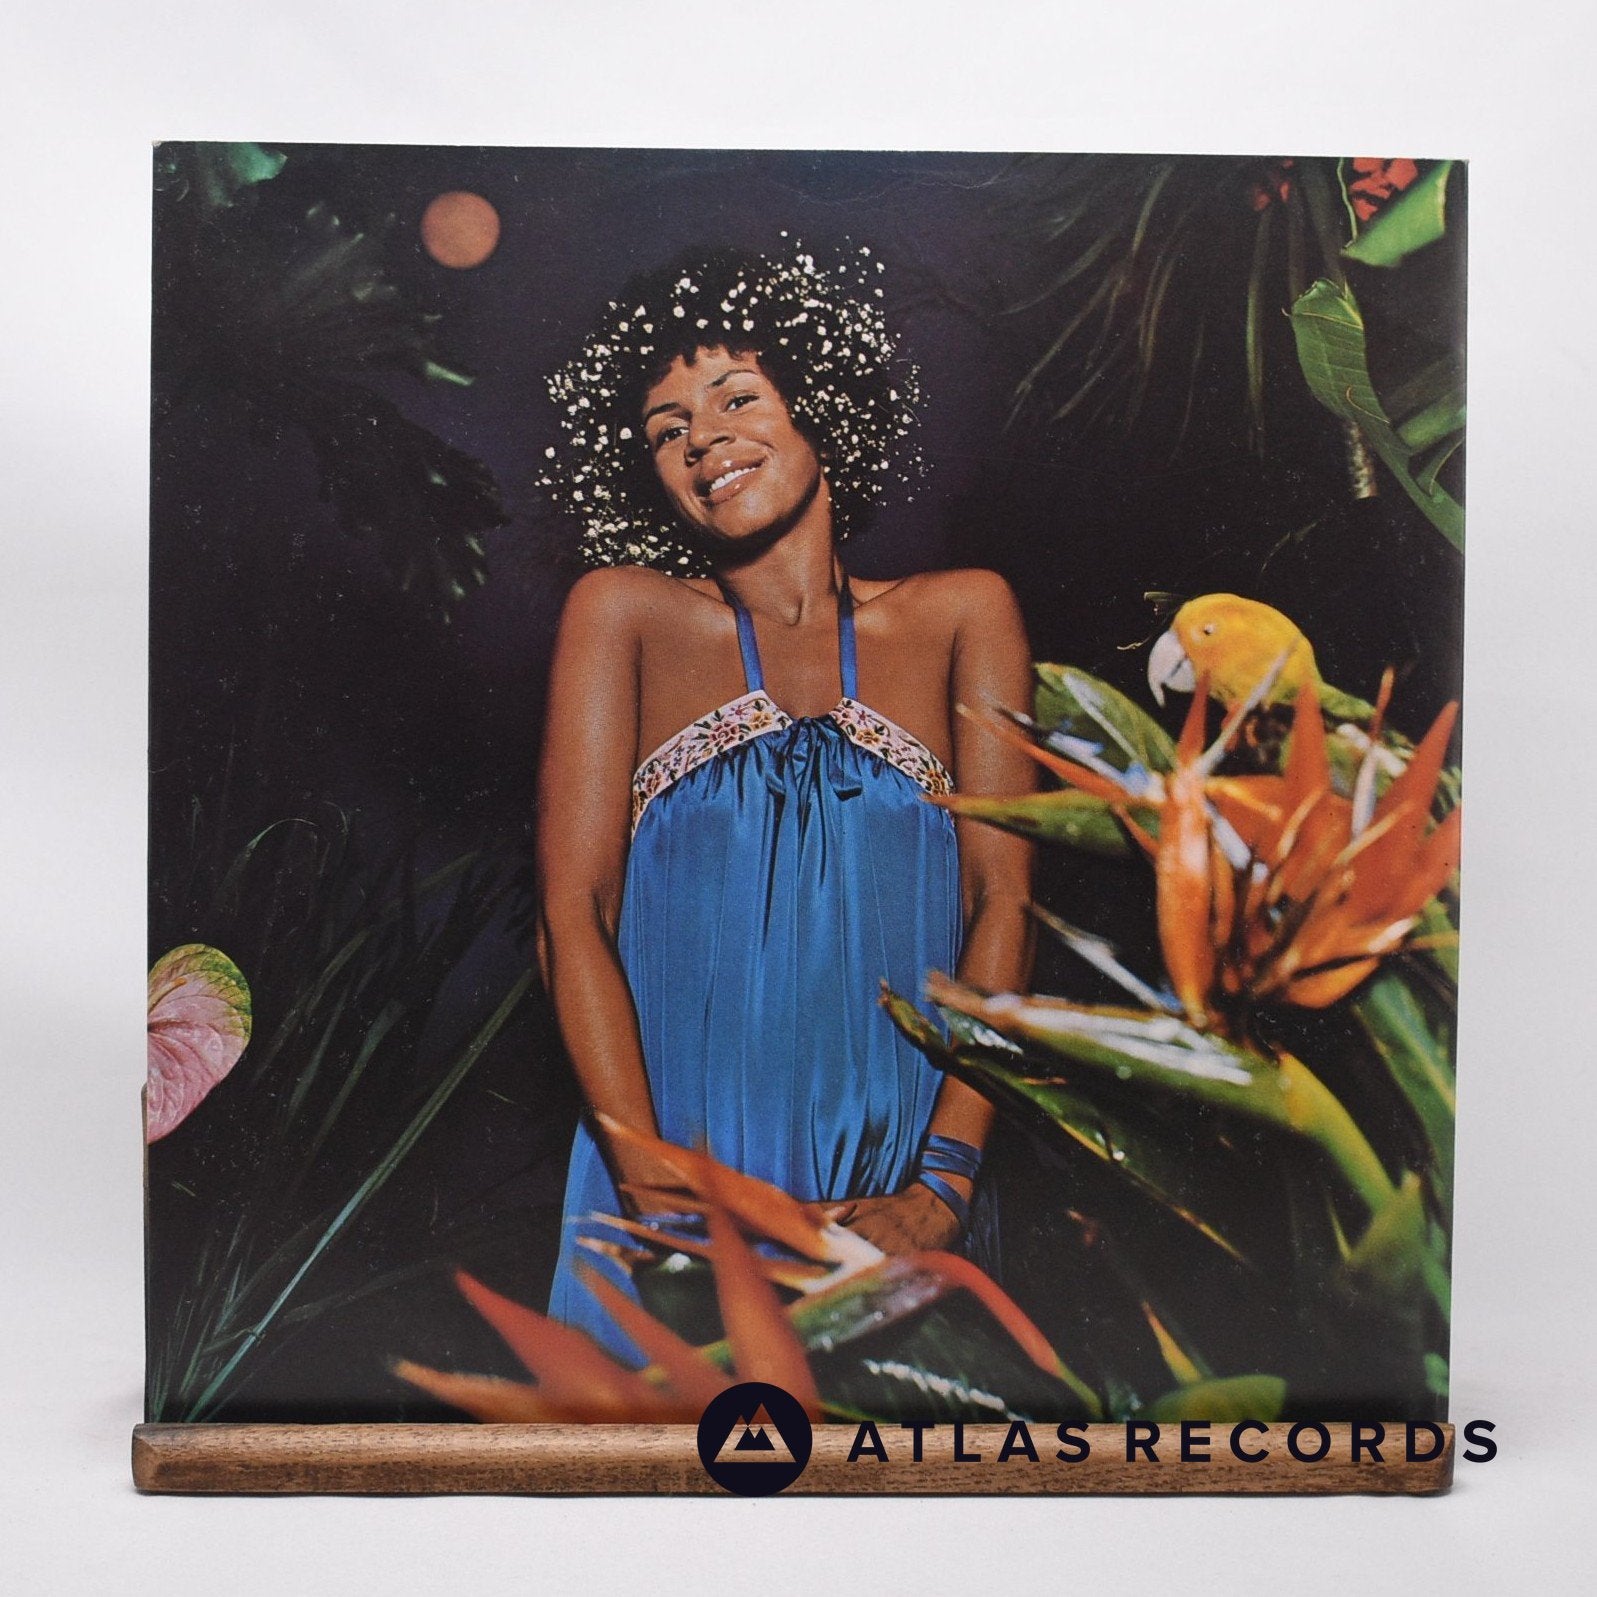 Minnie Riperton - Adventures In Paradise - LP Vinyl Record - VG+/VG+